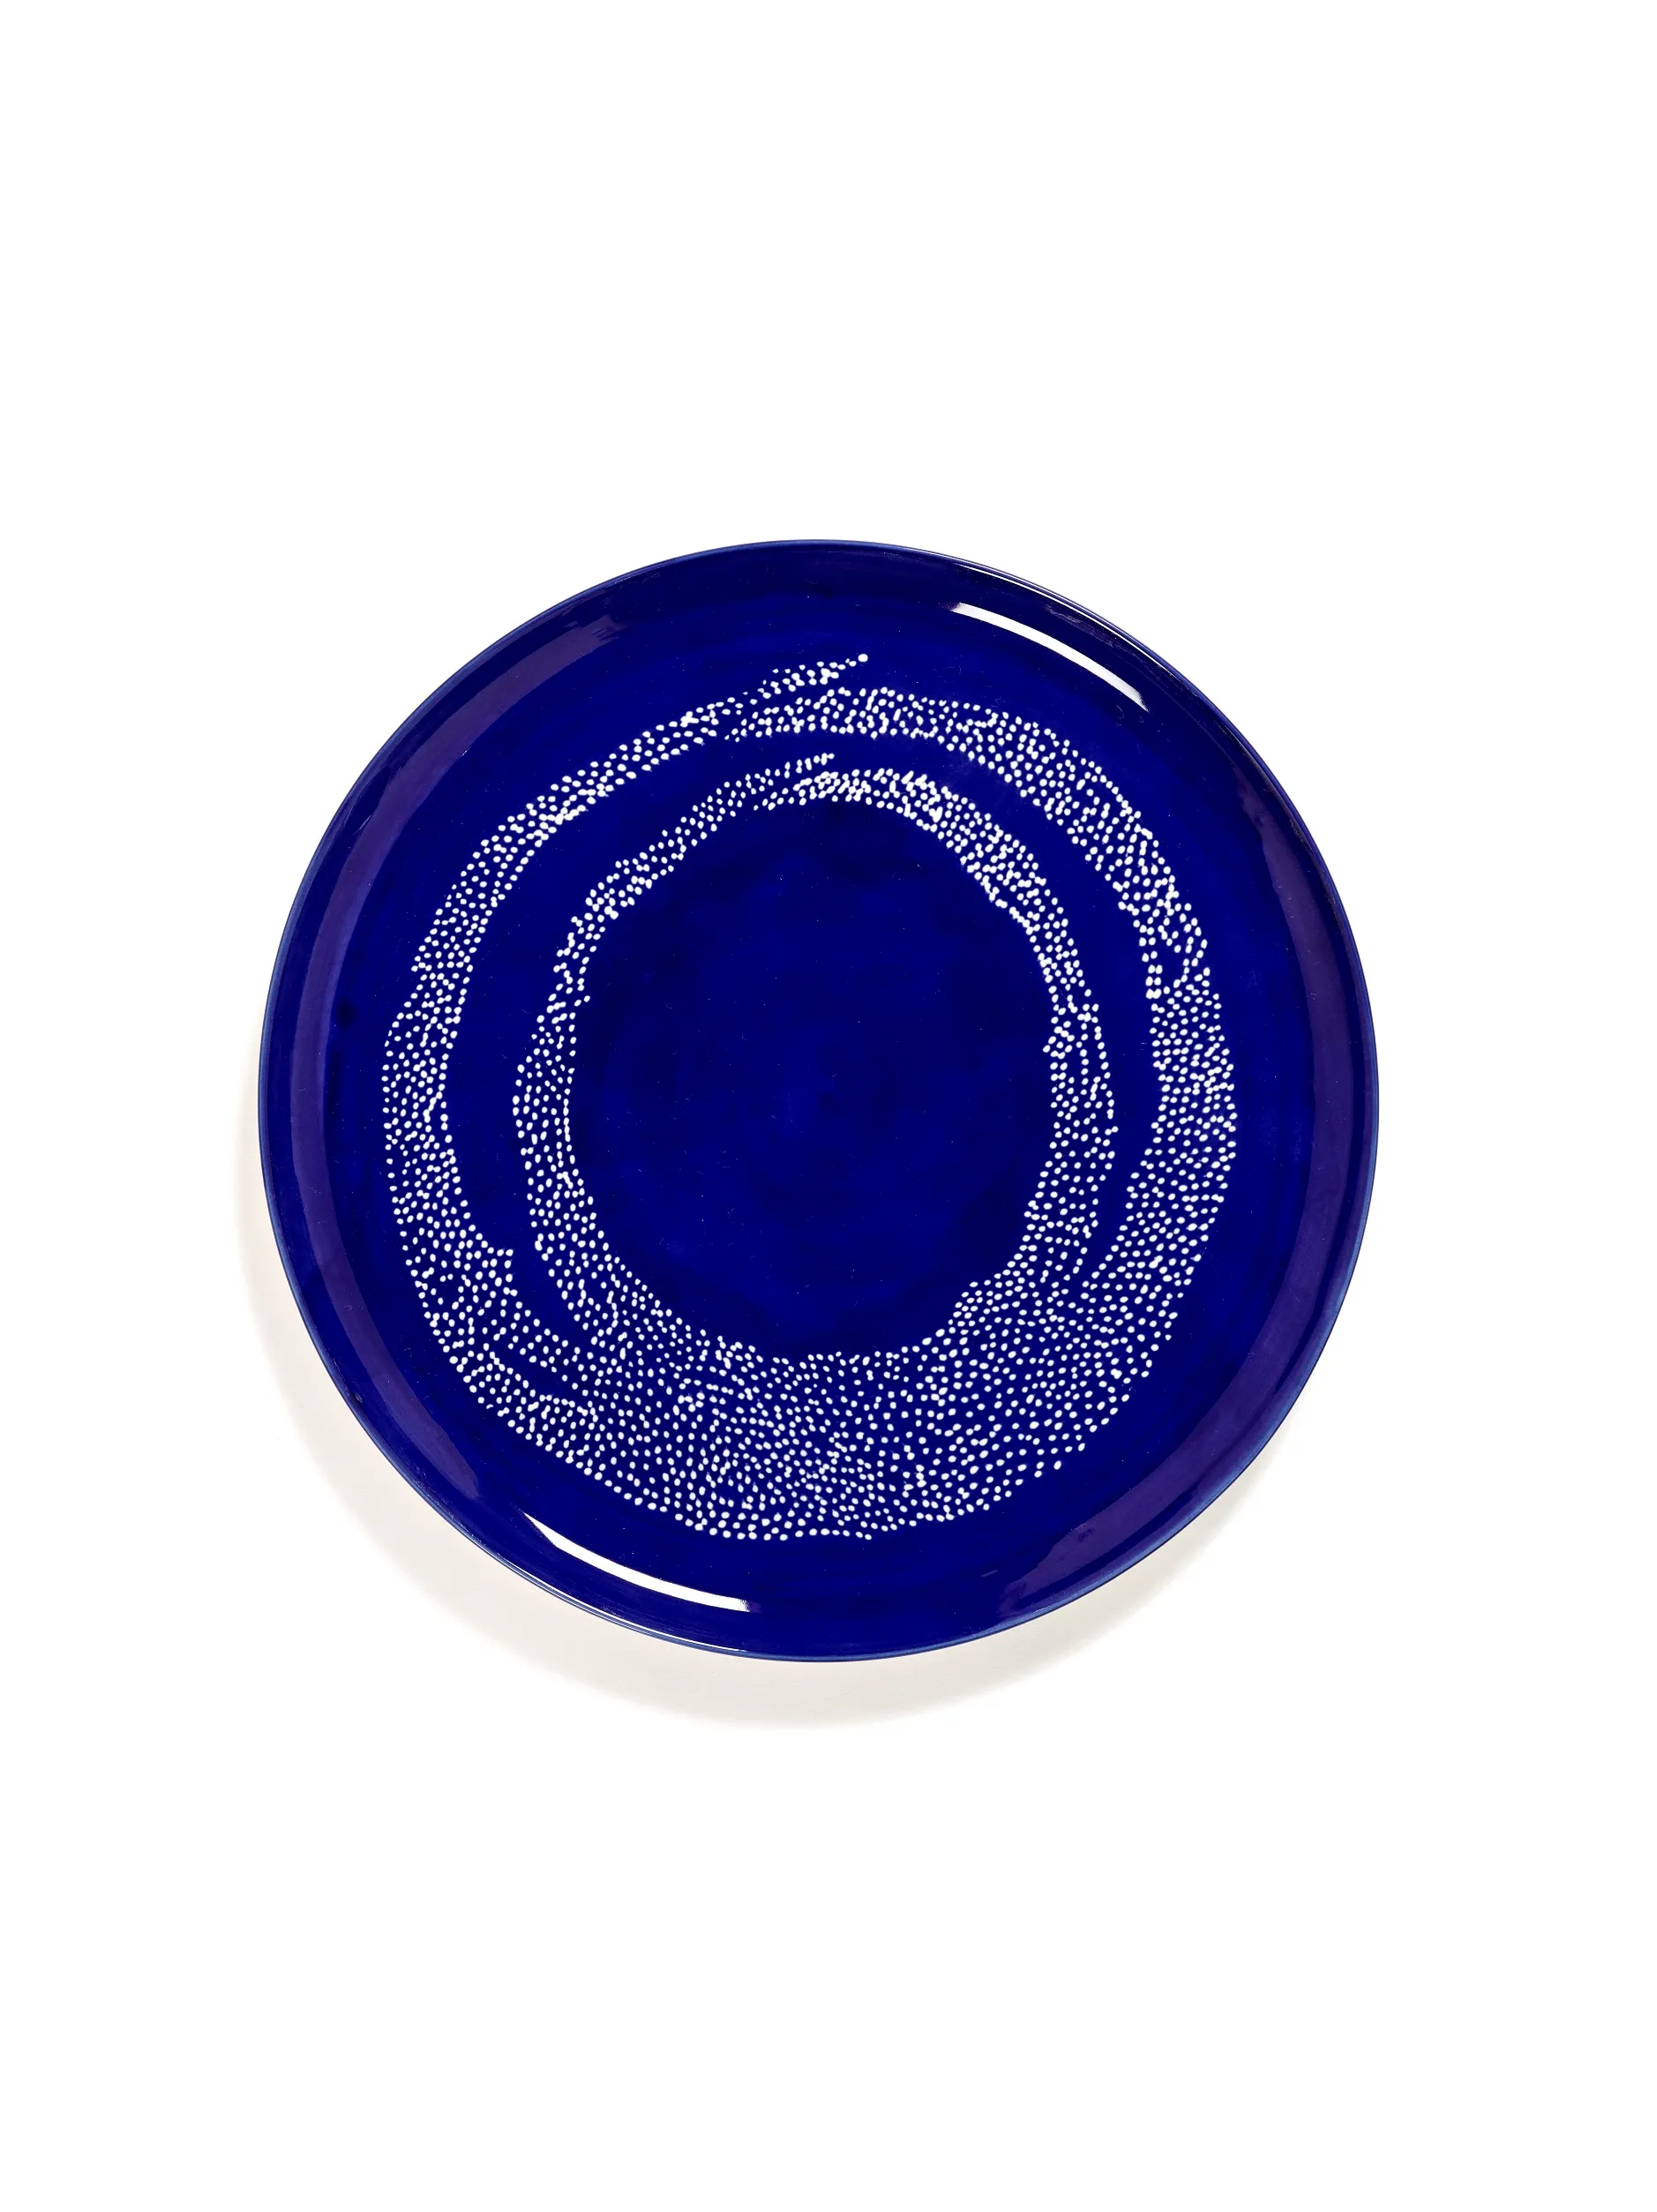 Serving Plate Dark Blue-Dots White Feast Ottolenghi by Serax L 35 W 35 H 2 CM